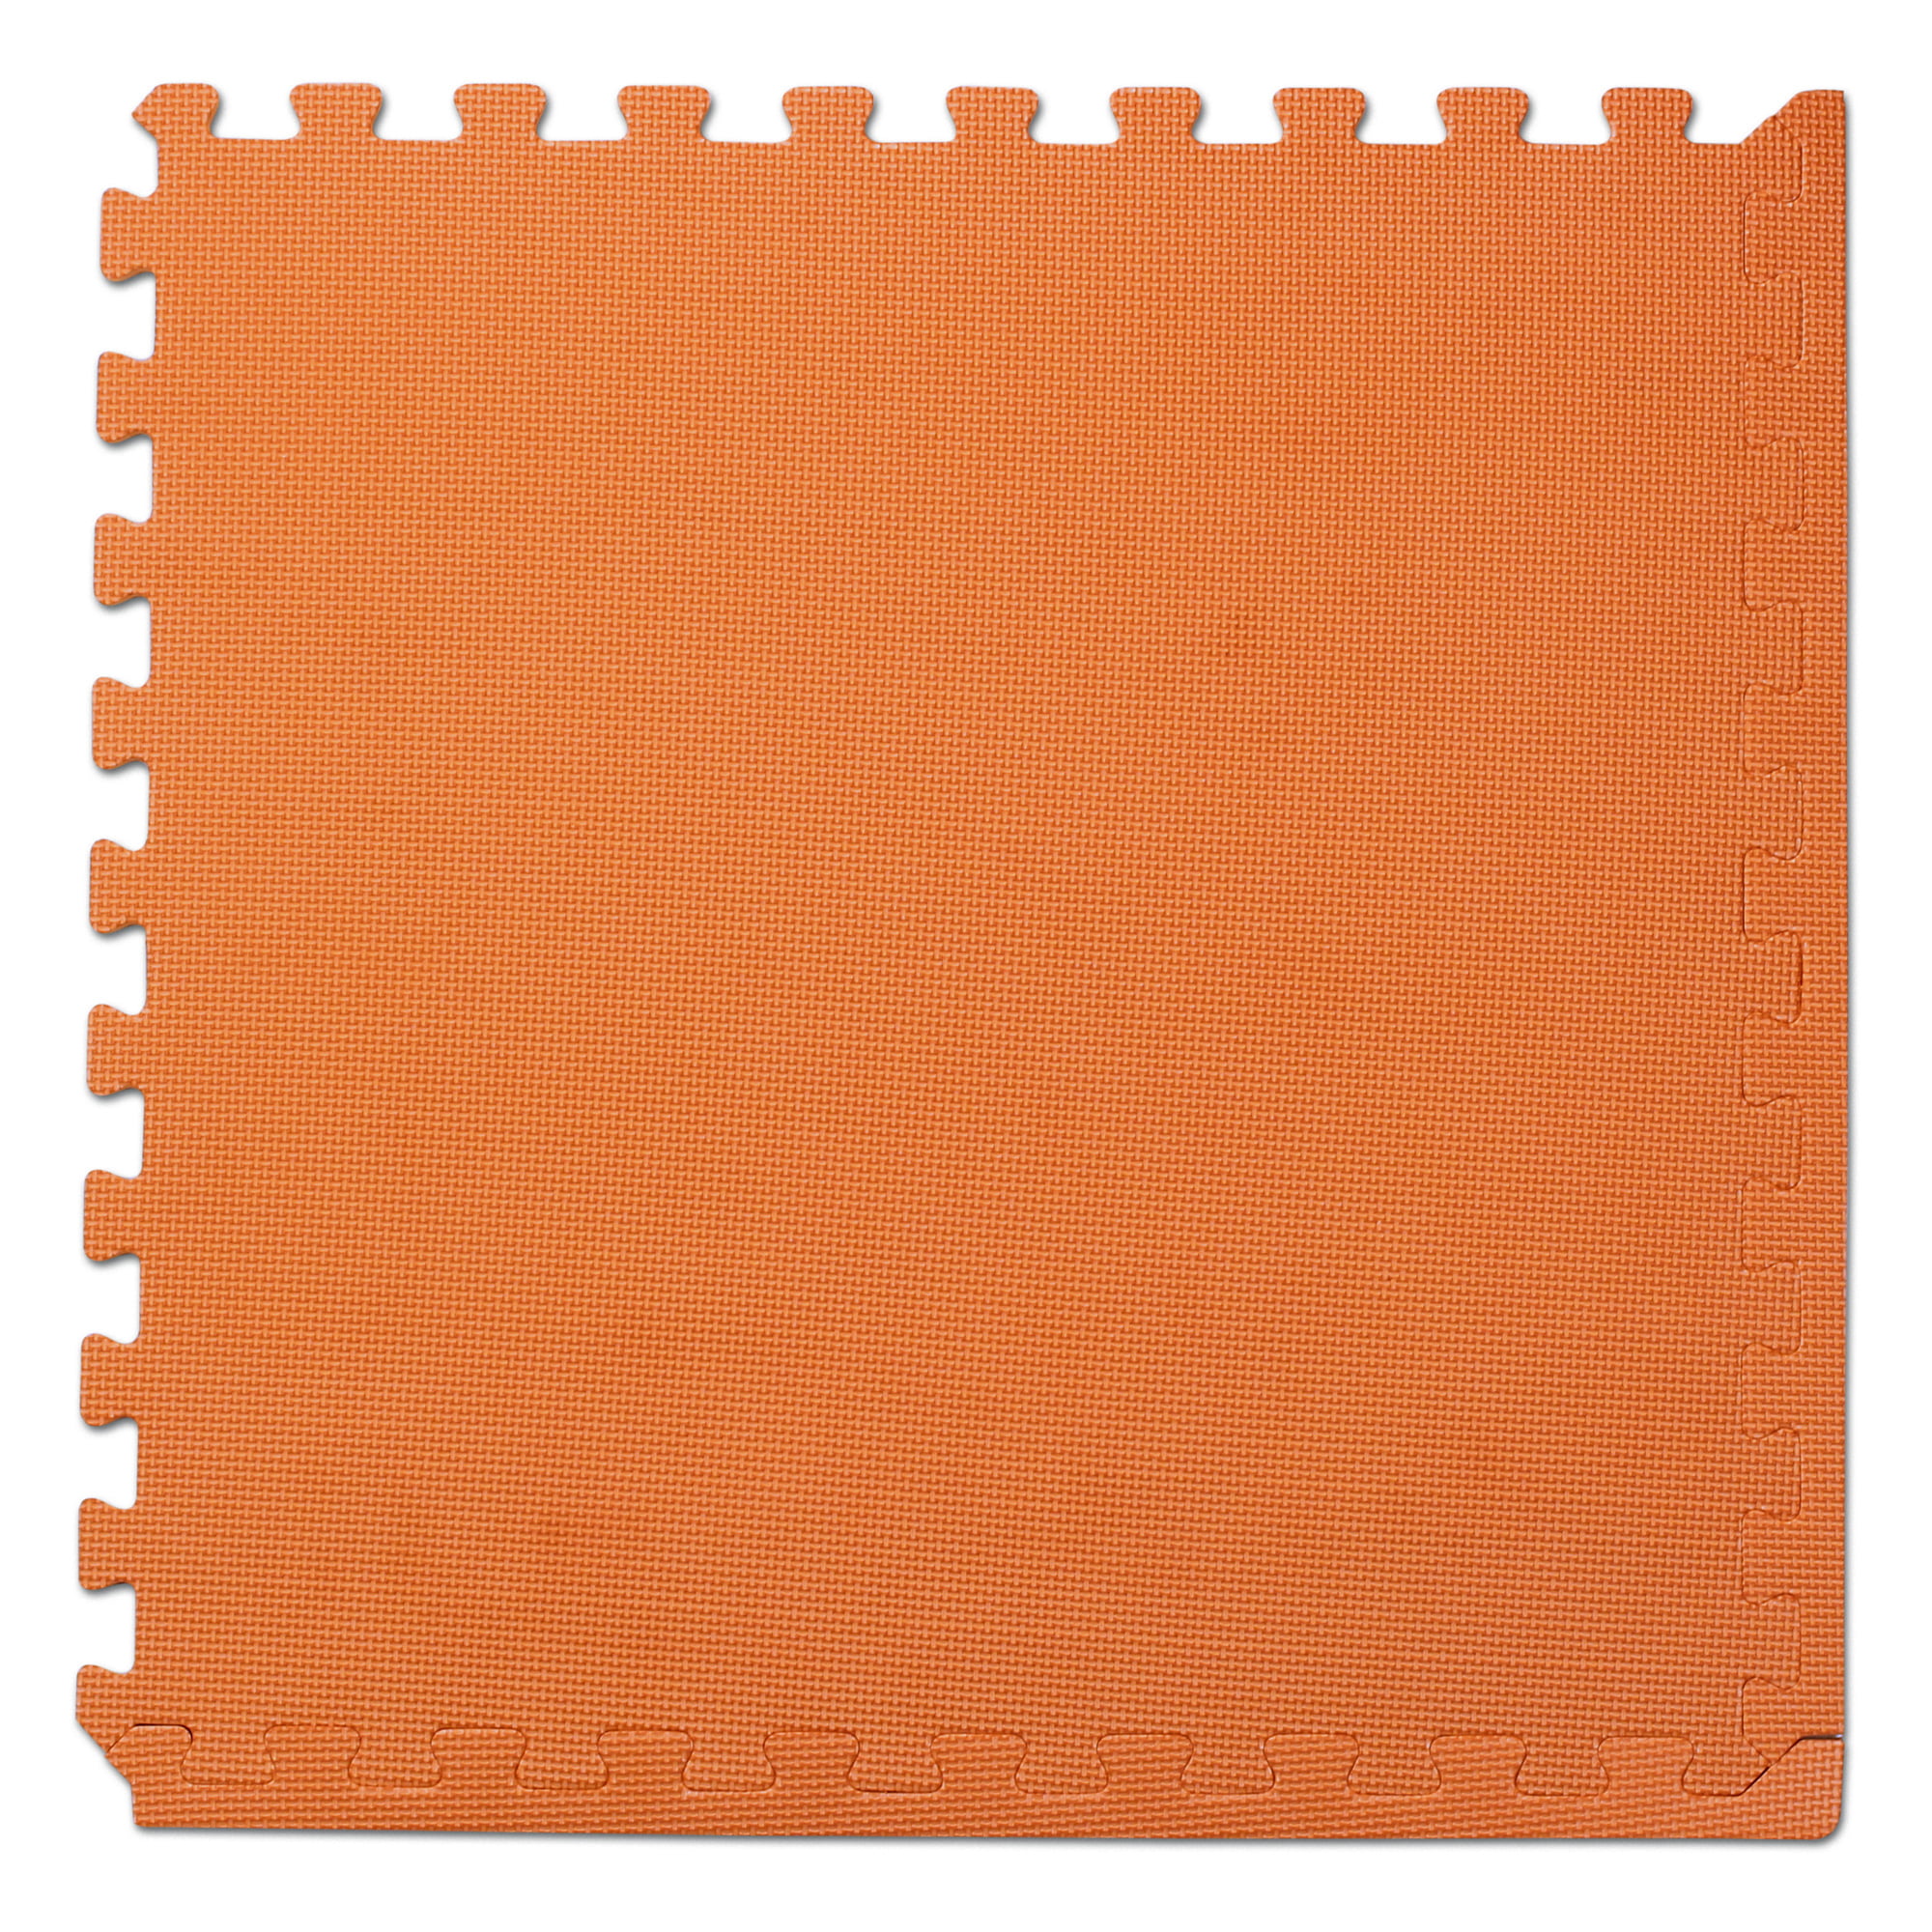 168 sqft pink interlocking foam floor puzzle tiles mats puzzle mat flooring 